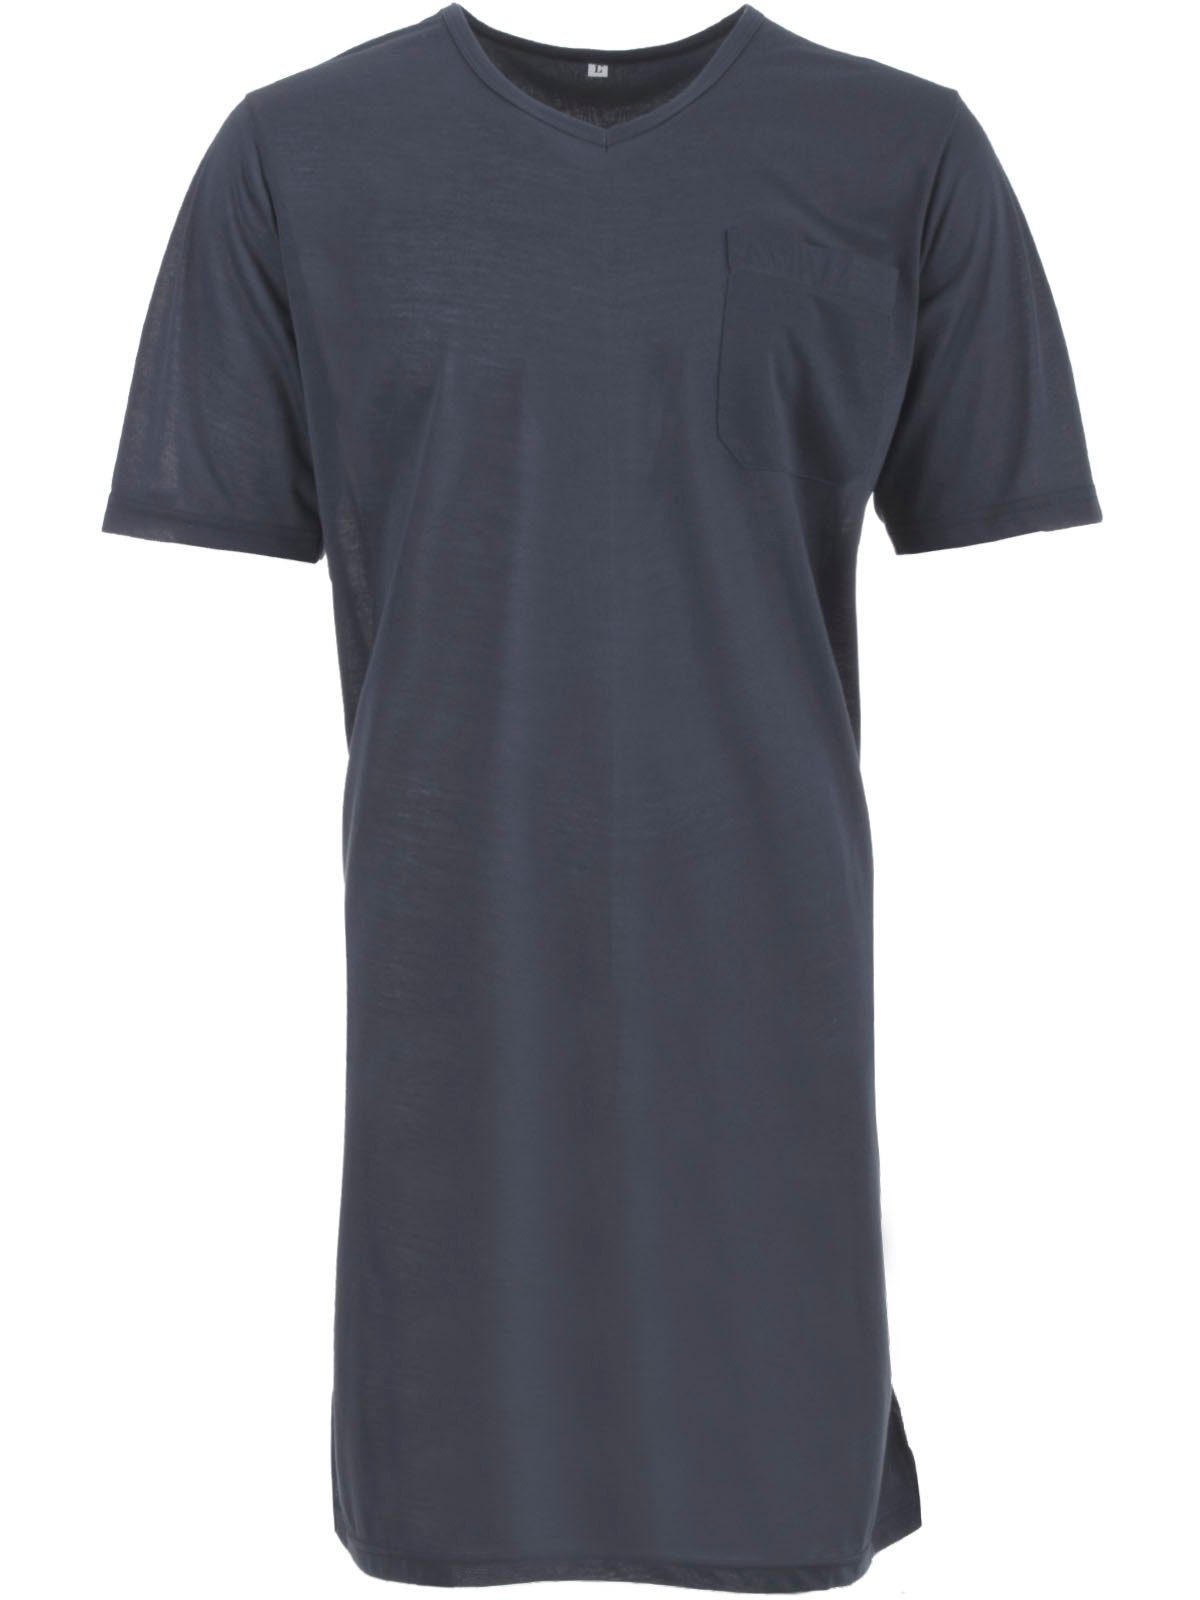 Lucky Nachthemd Nachthemd Kurzarm - Uni V-Ausschnitt anthrazit